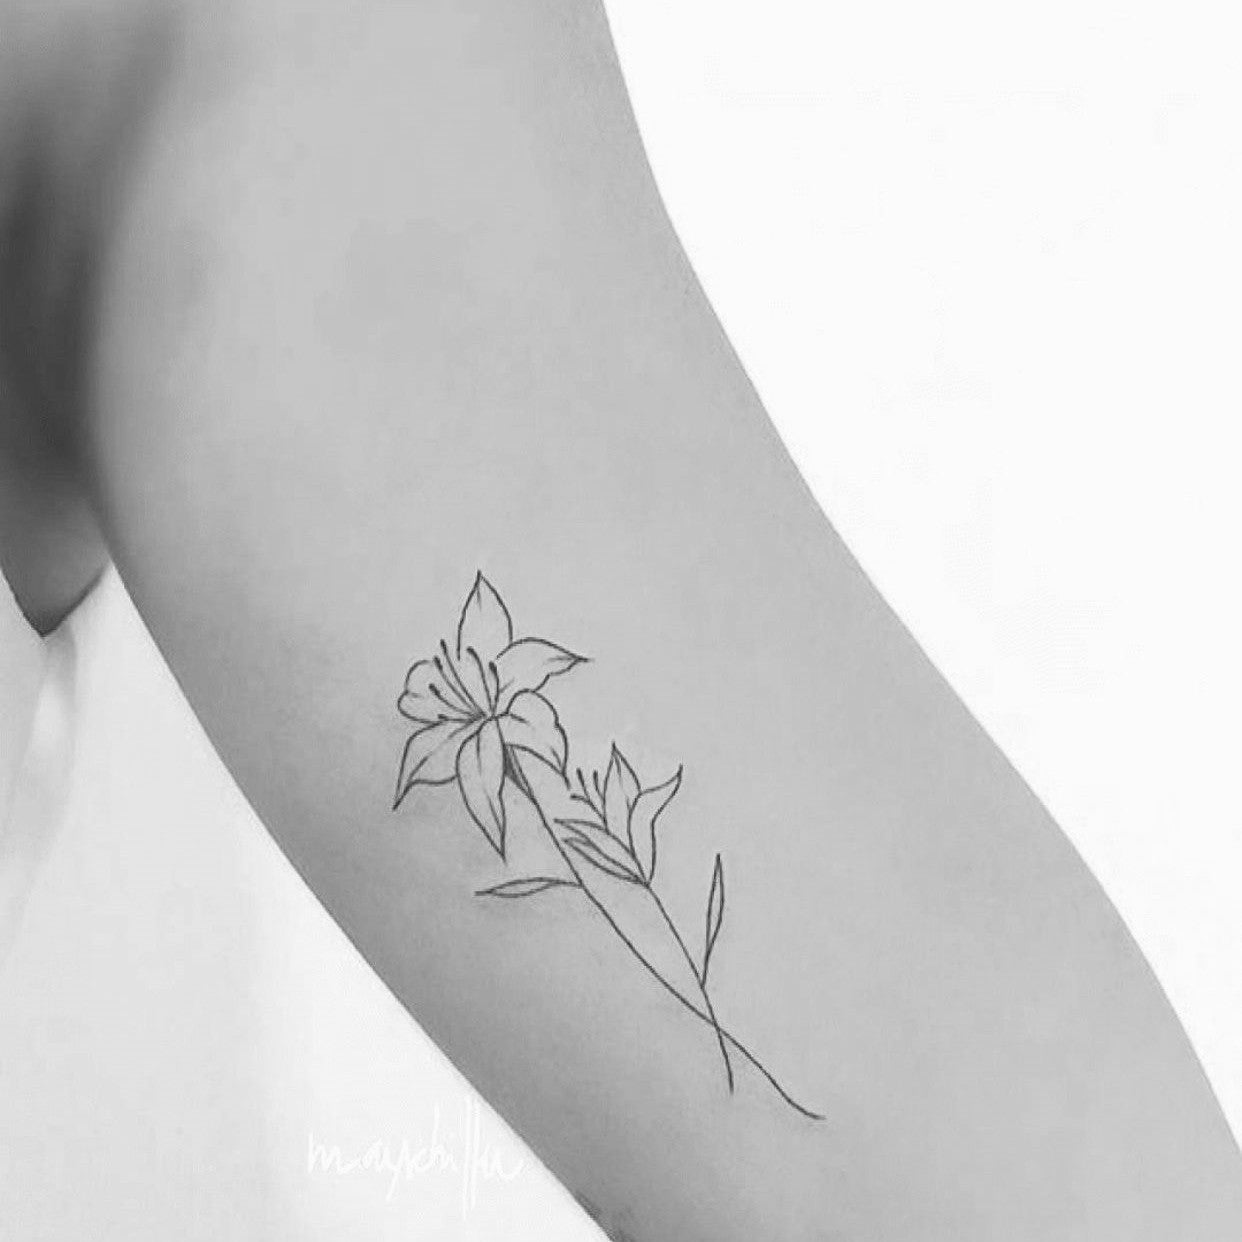 Daffodil tattoo images